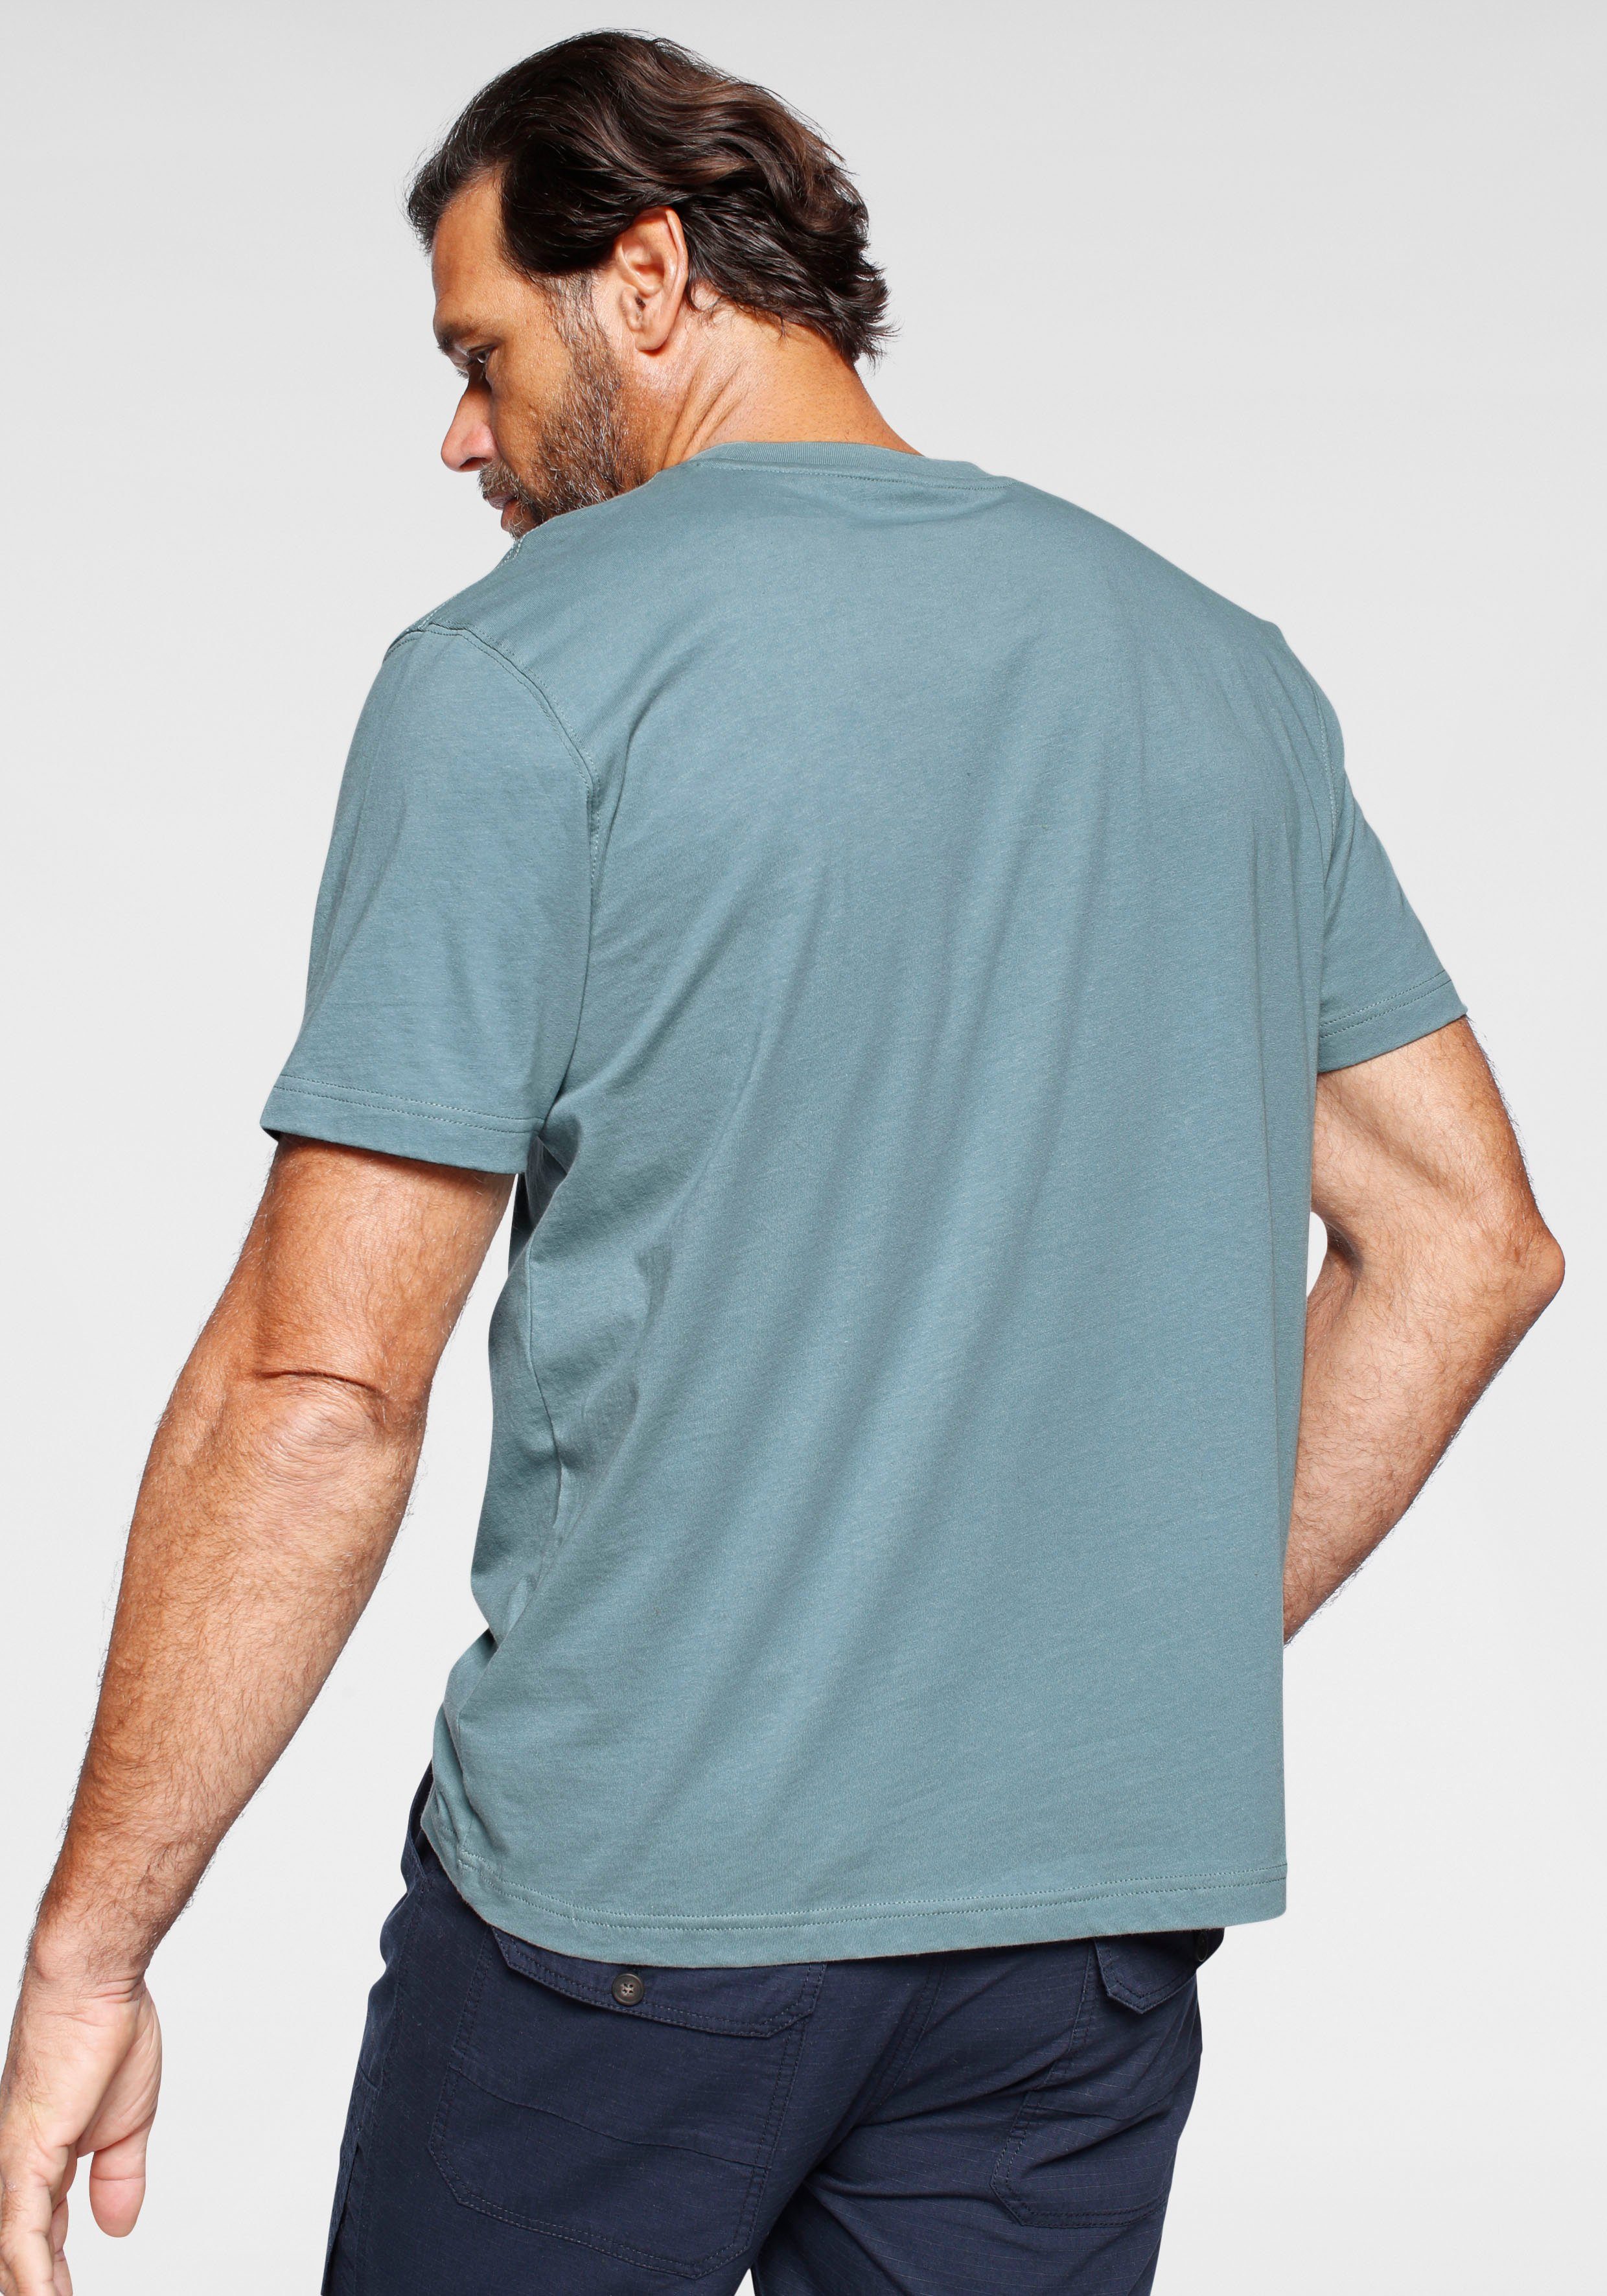 T-Shirt World blau-grau mit Man's Print